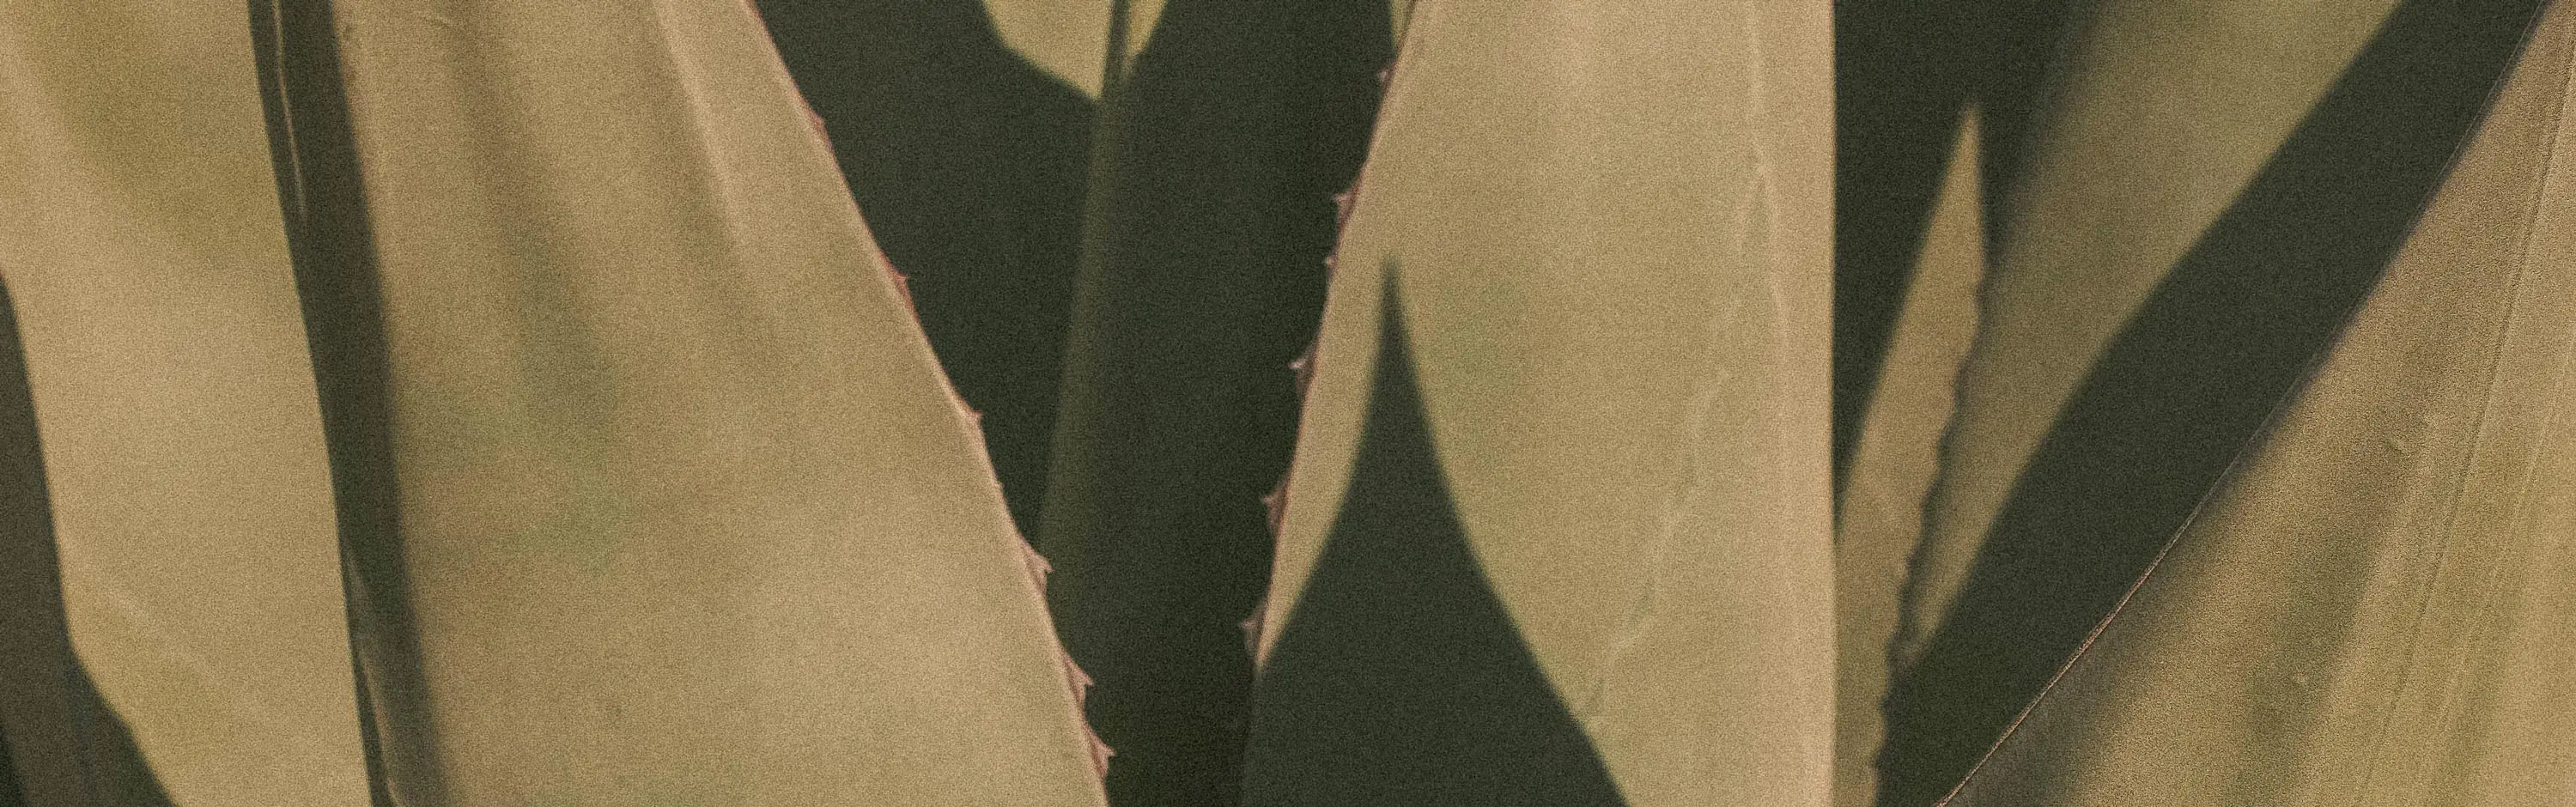 agave leaves